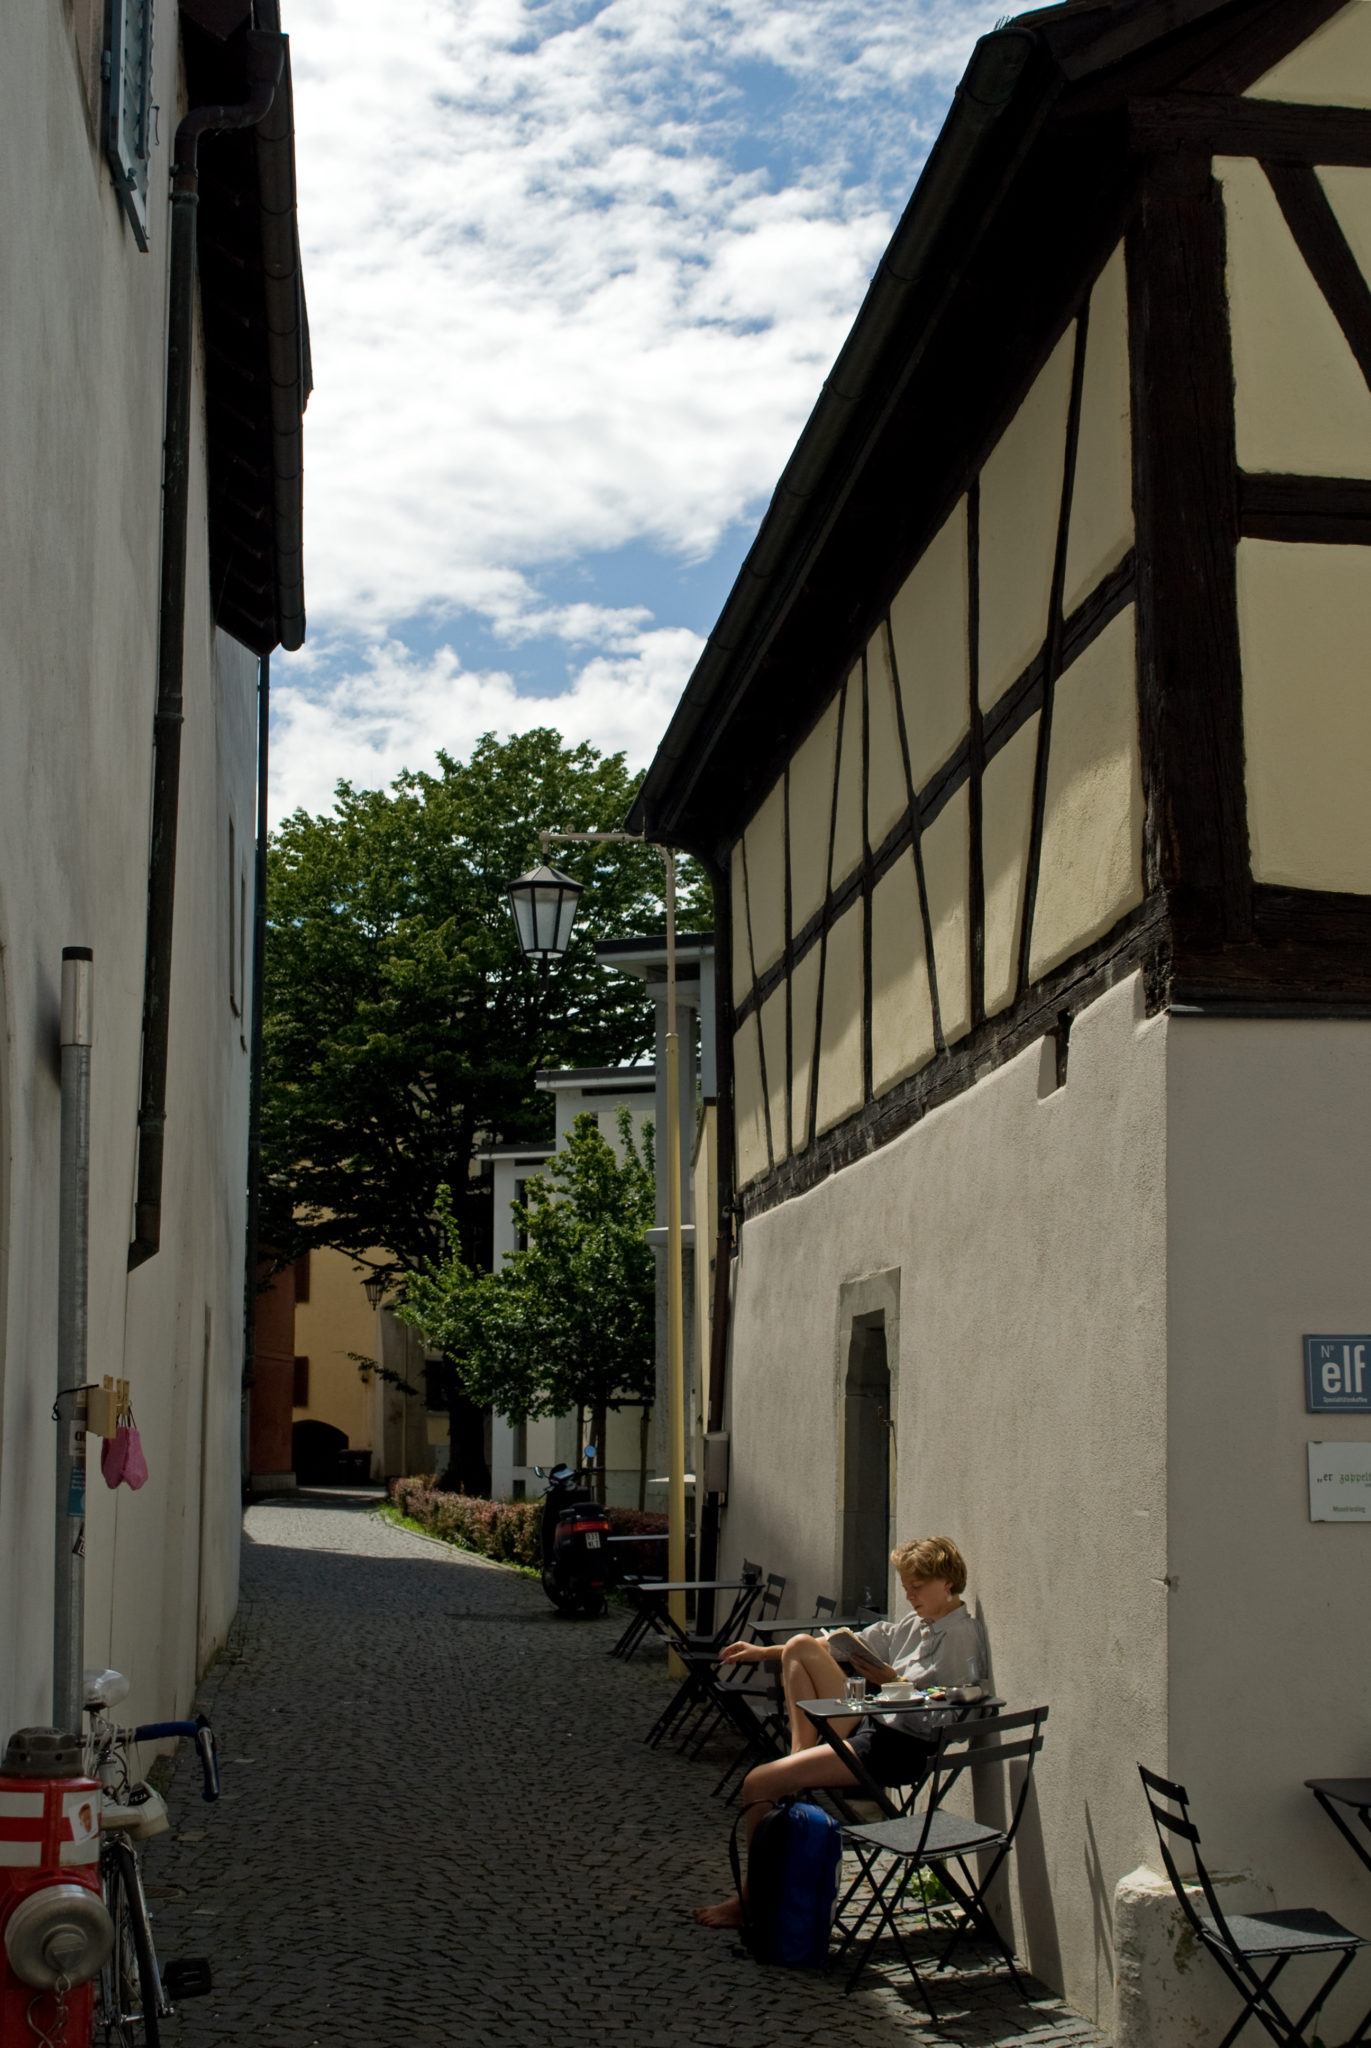 The reading girl in Konstanz